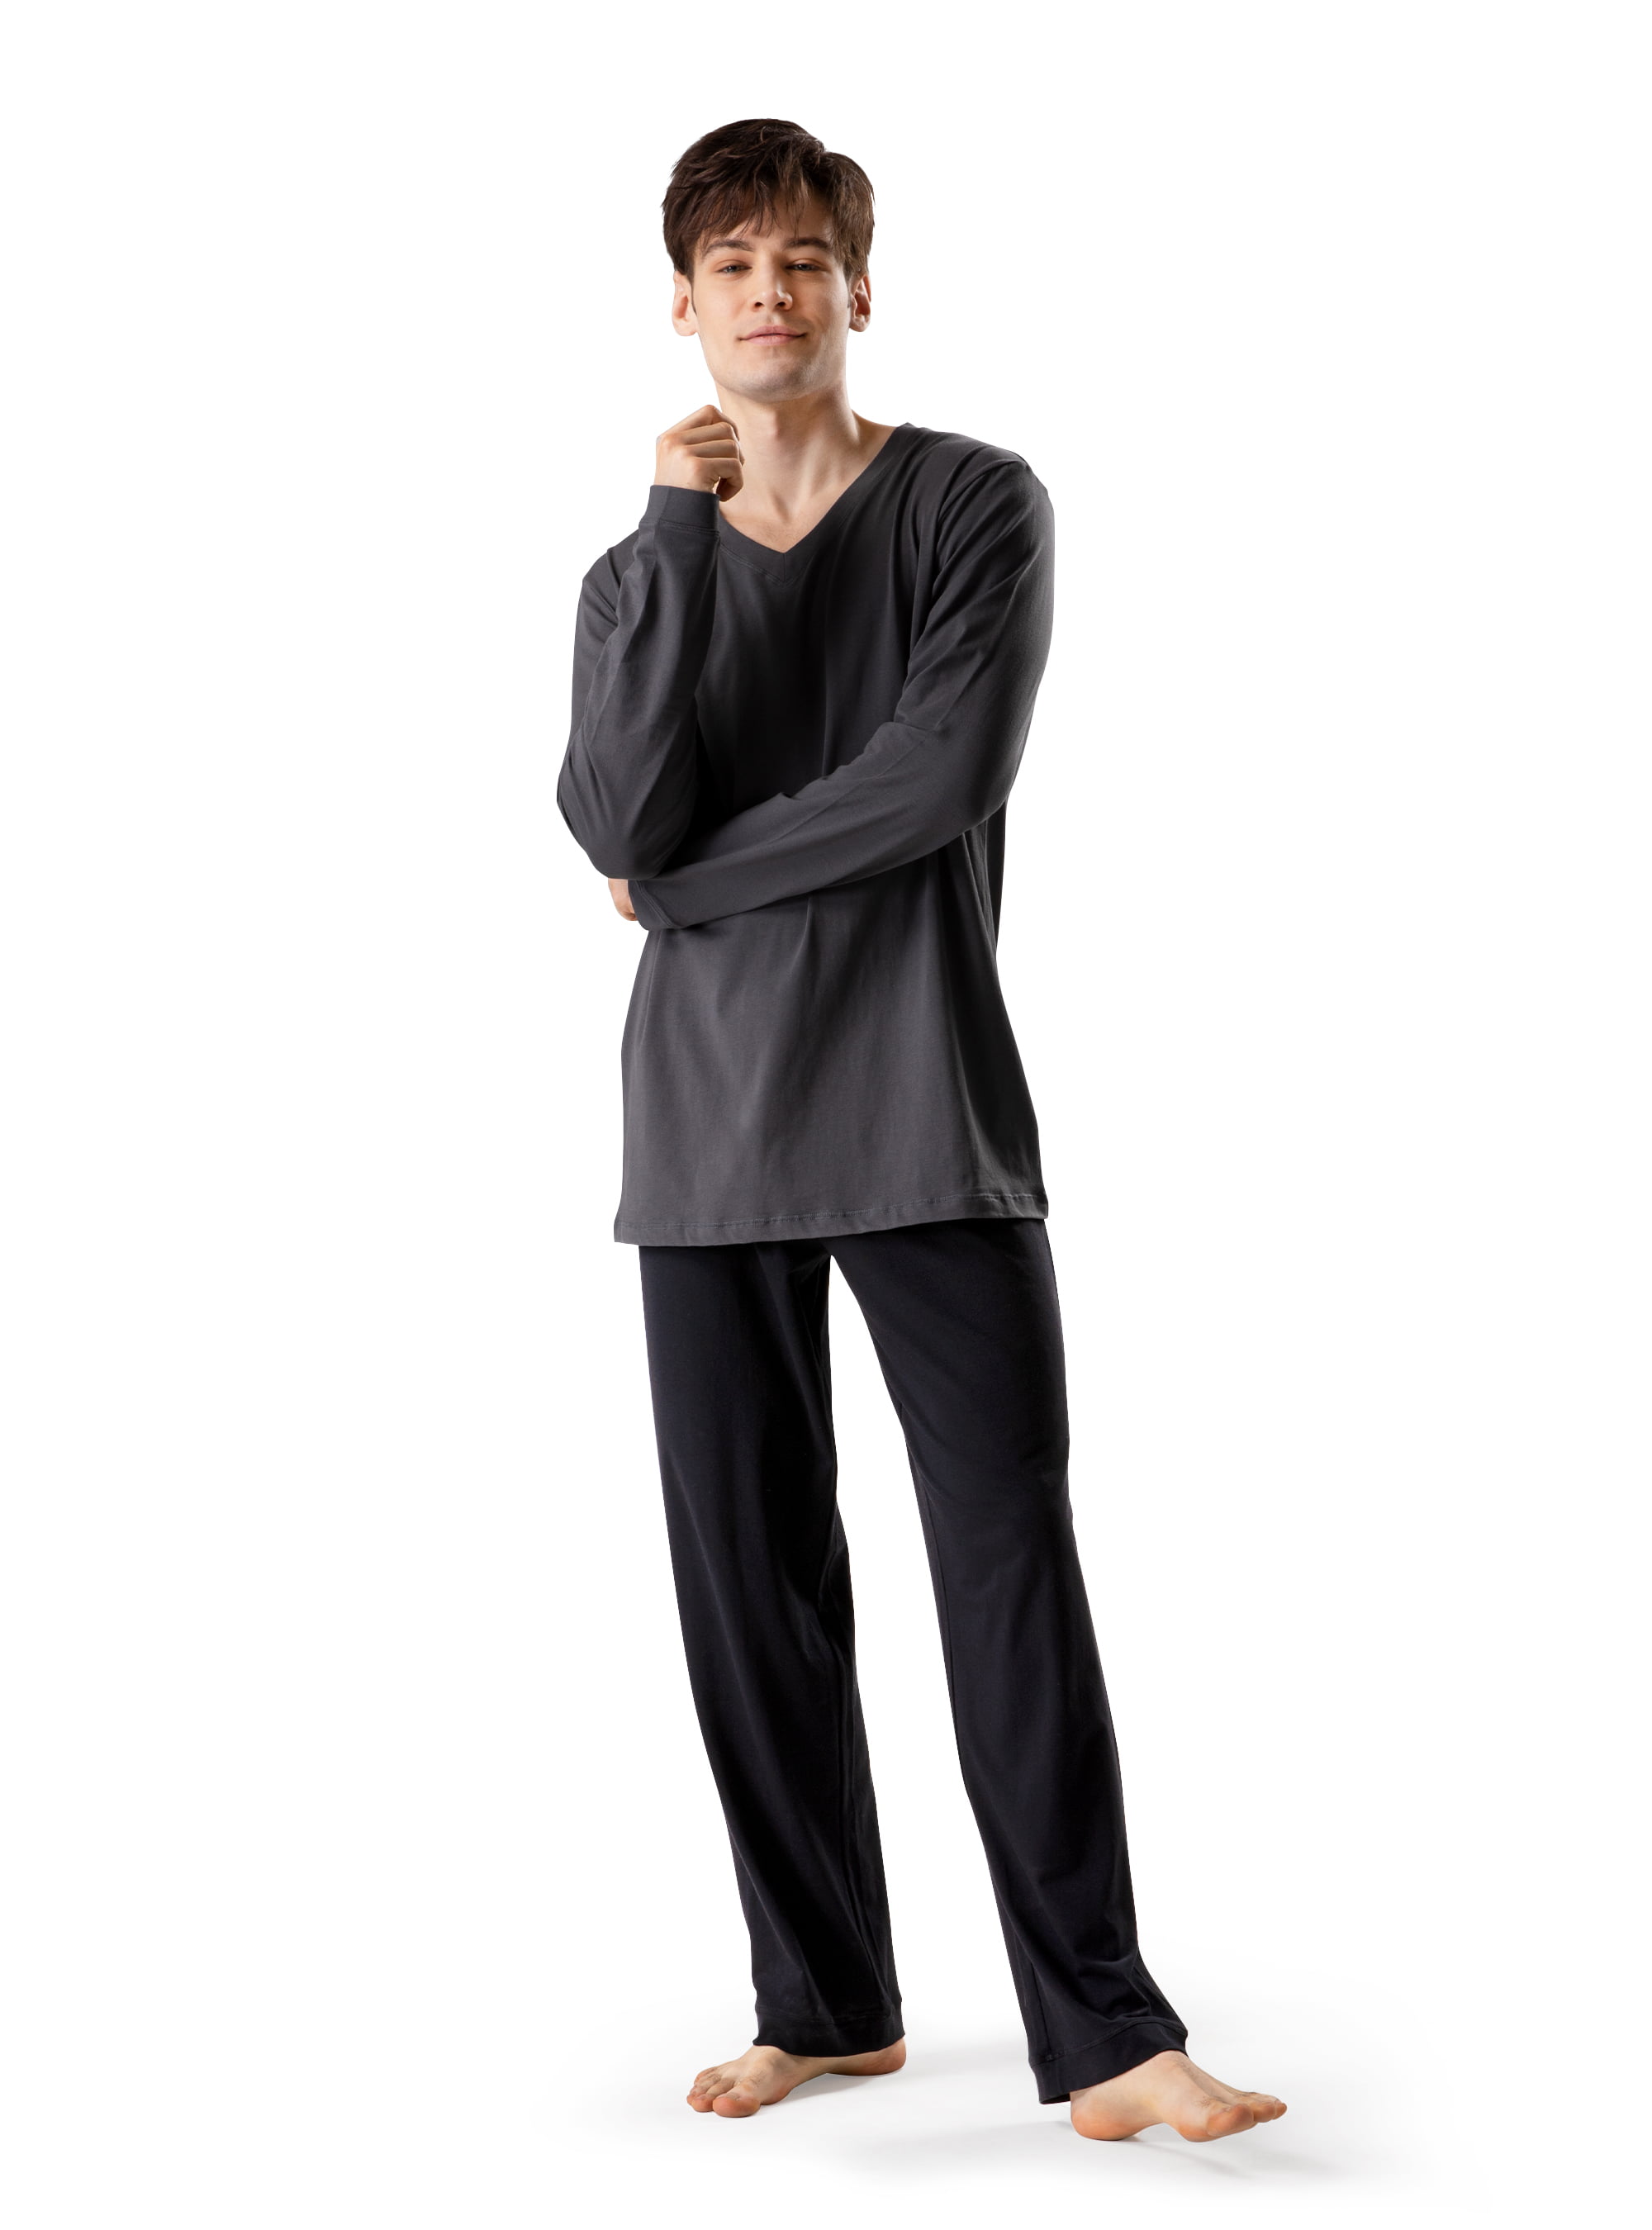 DAVID ARCHY Men's Pyjamas Lounge Pants Men's Loungewear Breathable and Comfortable Loungewear Bottoms